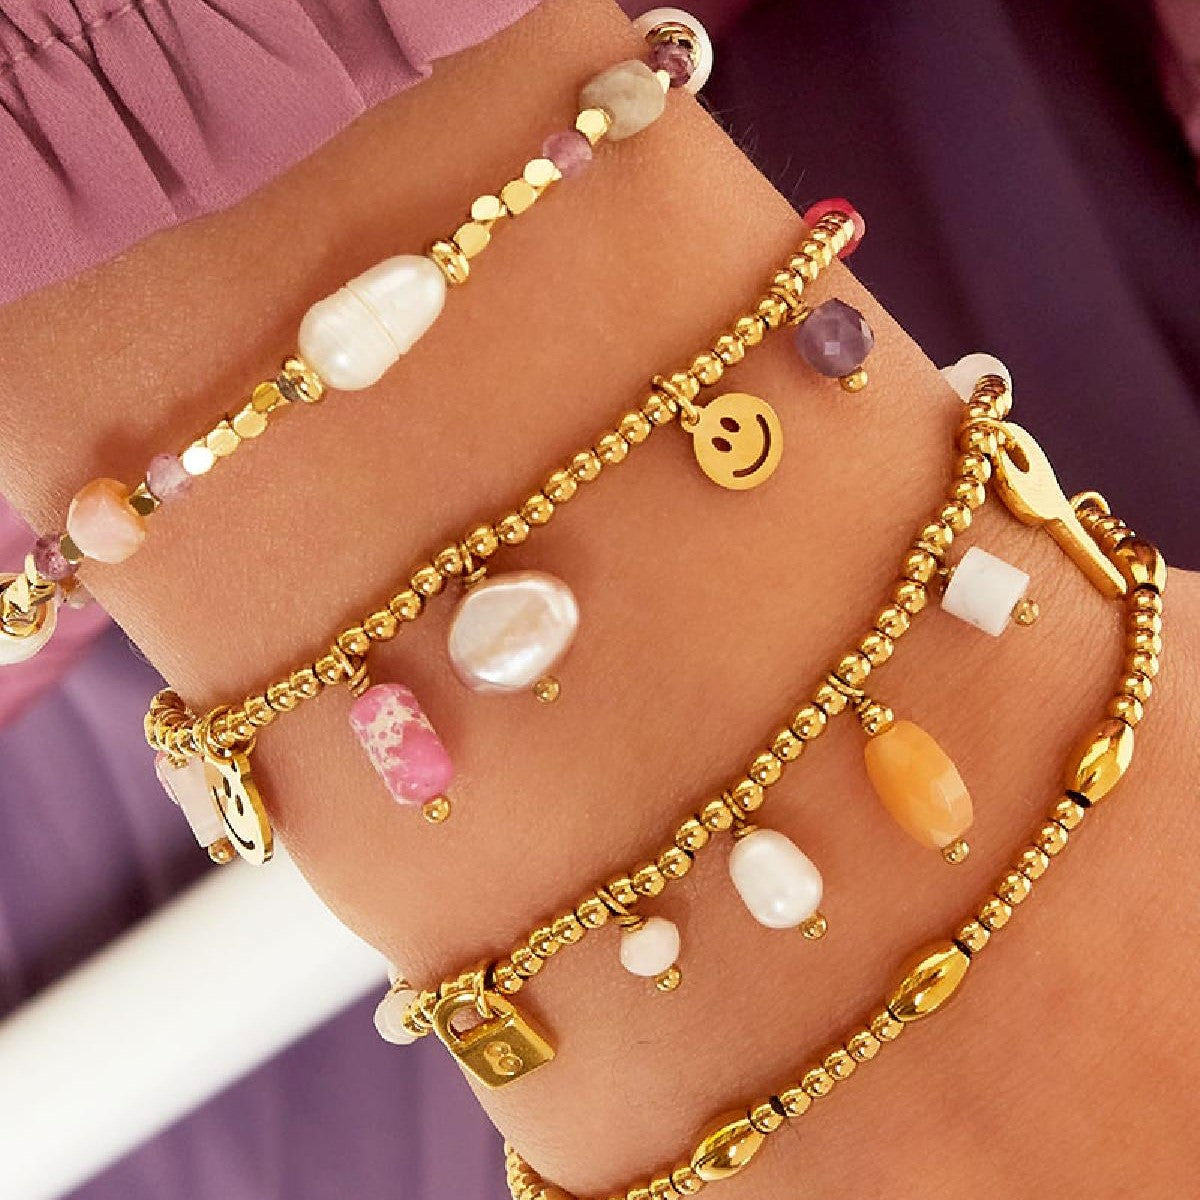 Bracelet happy beads pink